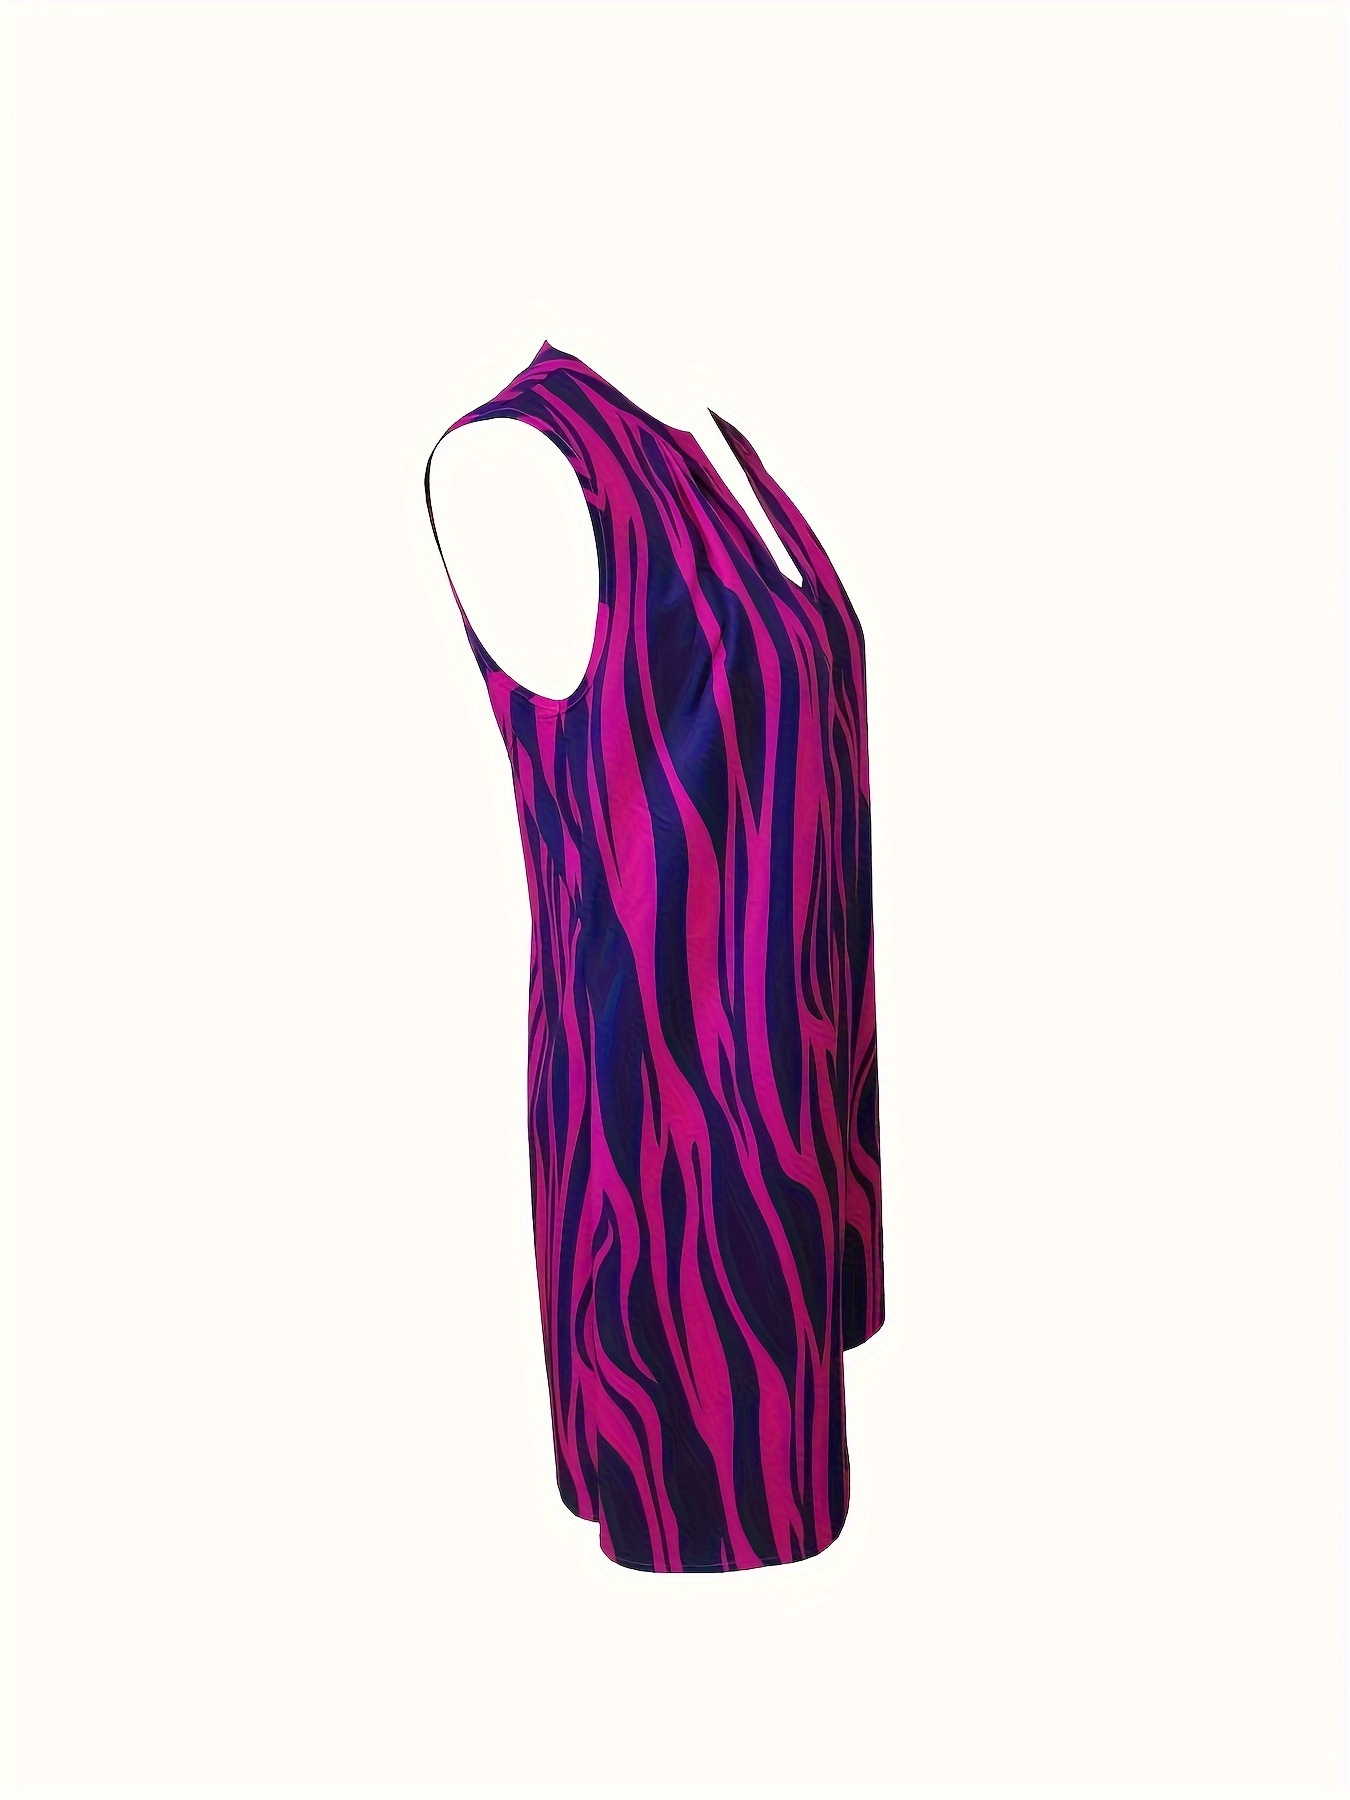 abstract ripple print dress casual v neck sleeveless dress womens clothing details 28